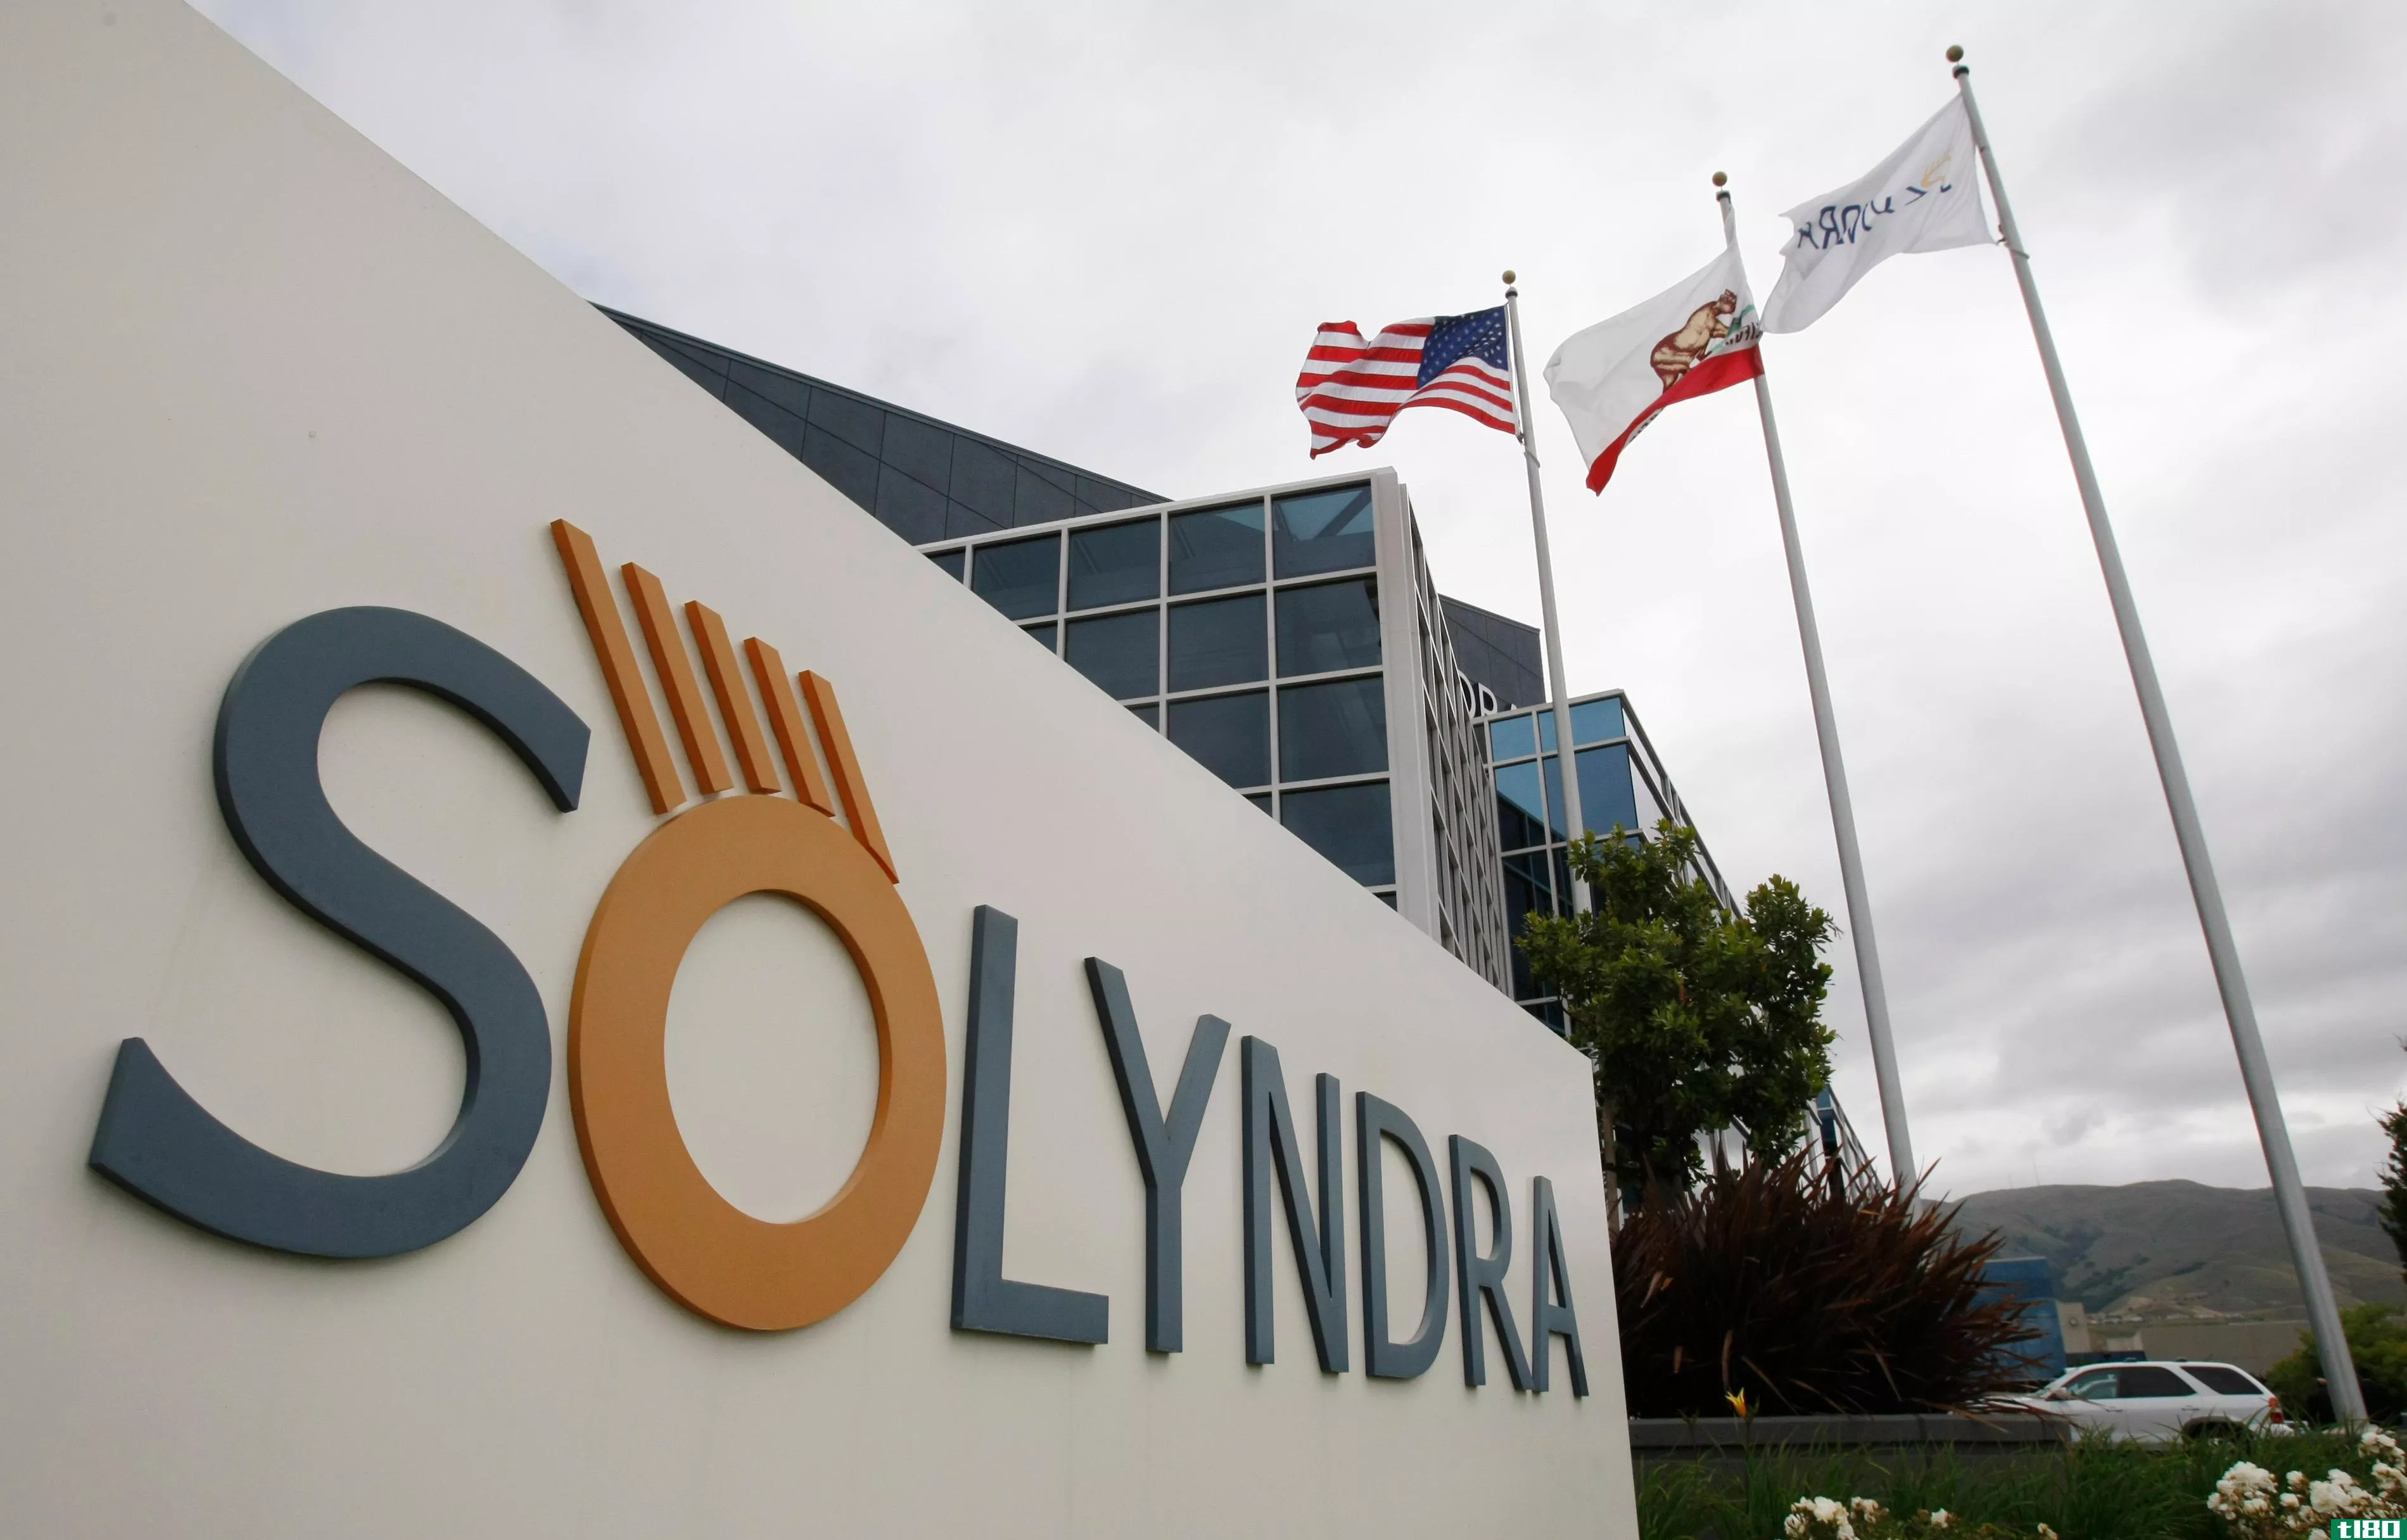 solyndra的旧工厂有了一个新的租户：elon musk的solarcity